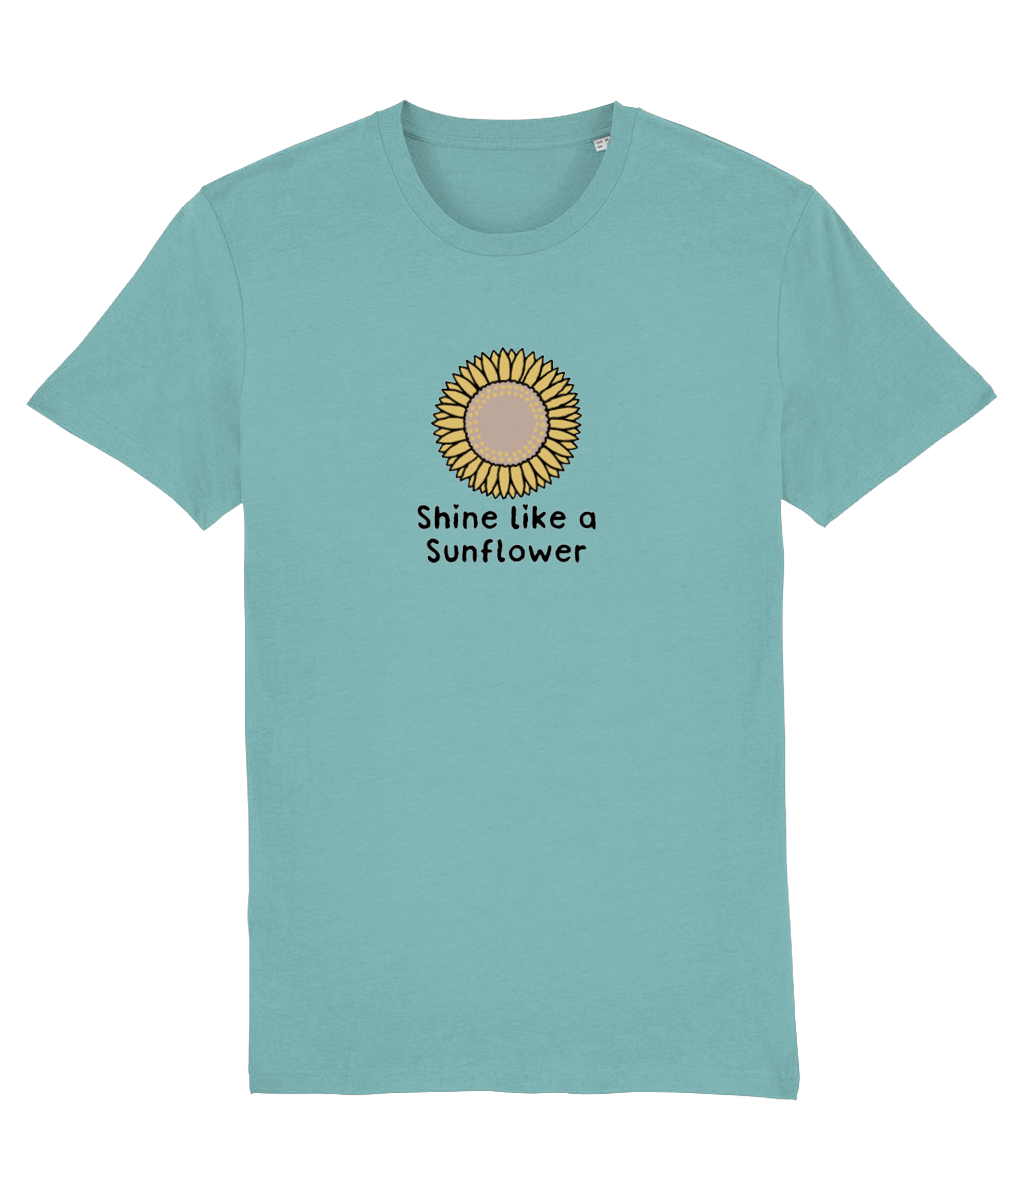 Shine Like A Sunflower Design 2 - Adult T-Shirt - Multi Colour Options